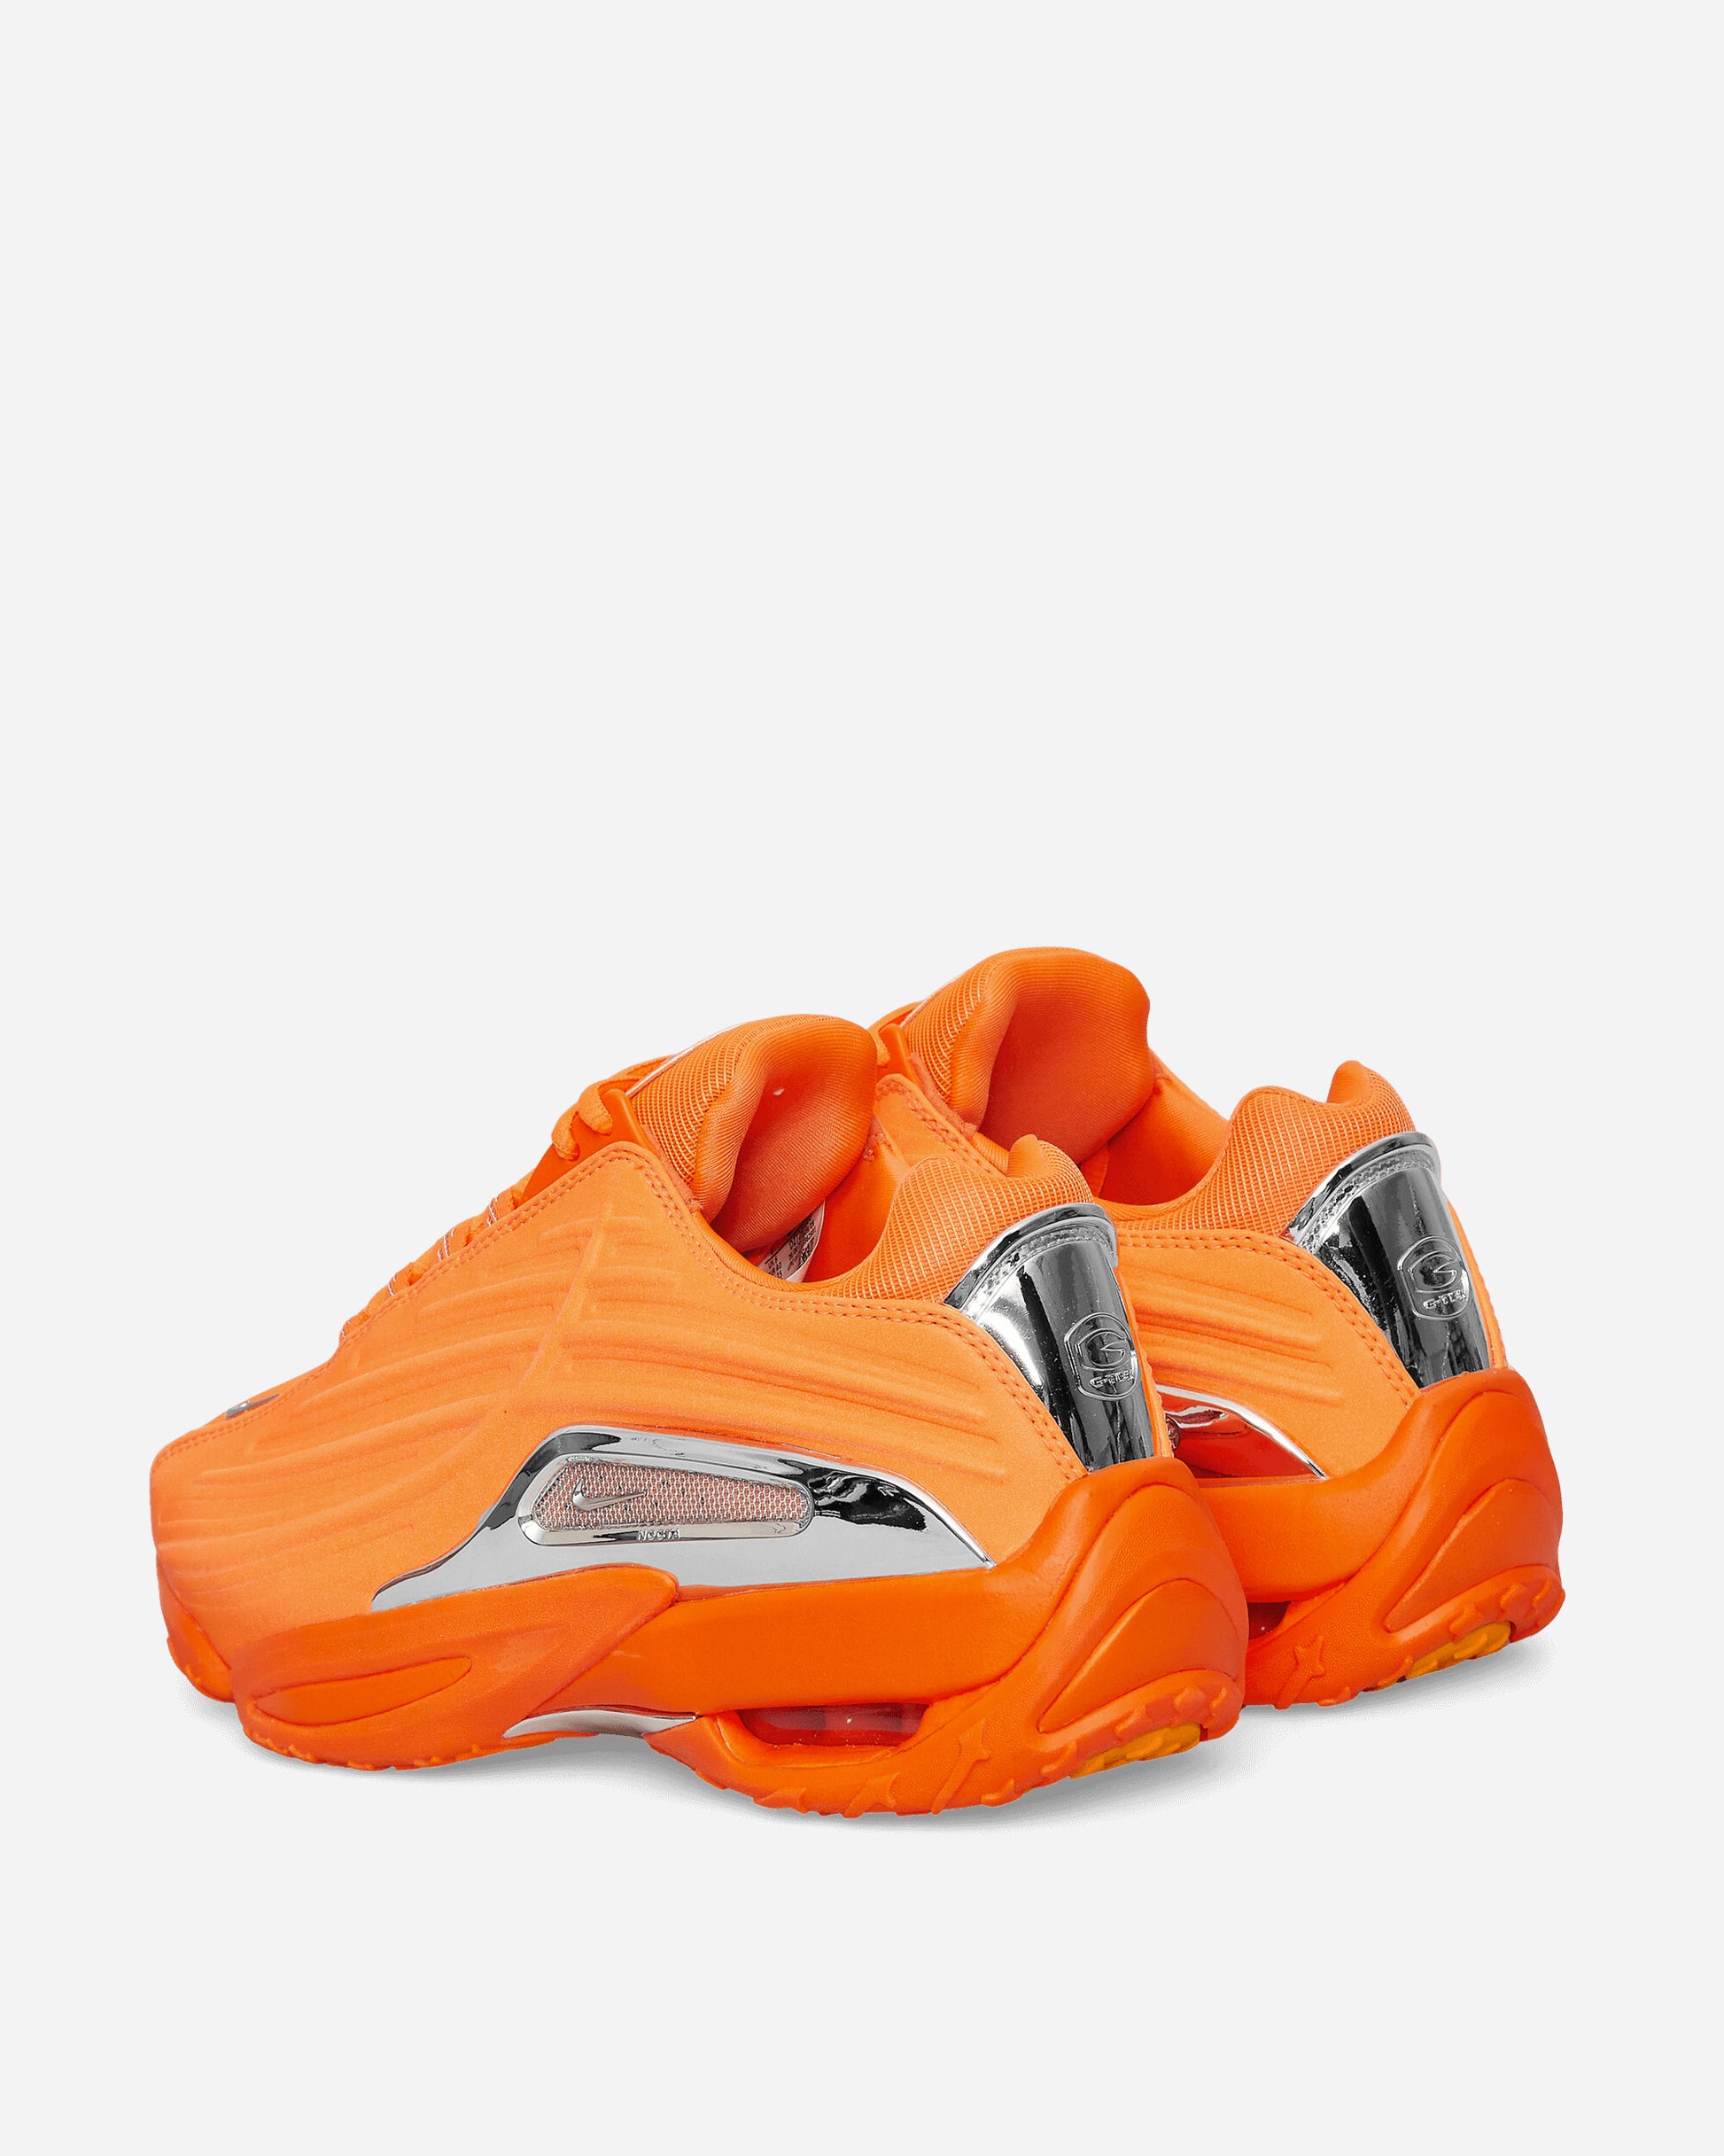 Nike Nocta Hot Step Ii Total Orange/Chrome Sneakers Low DZ7293-800